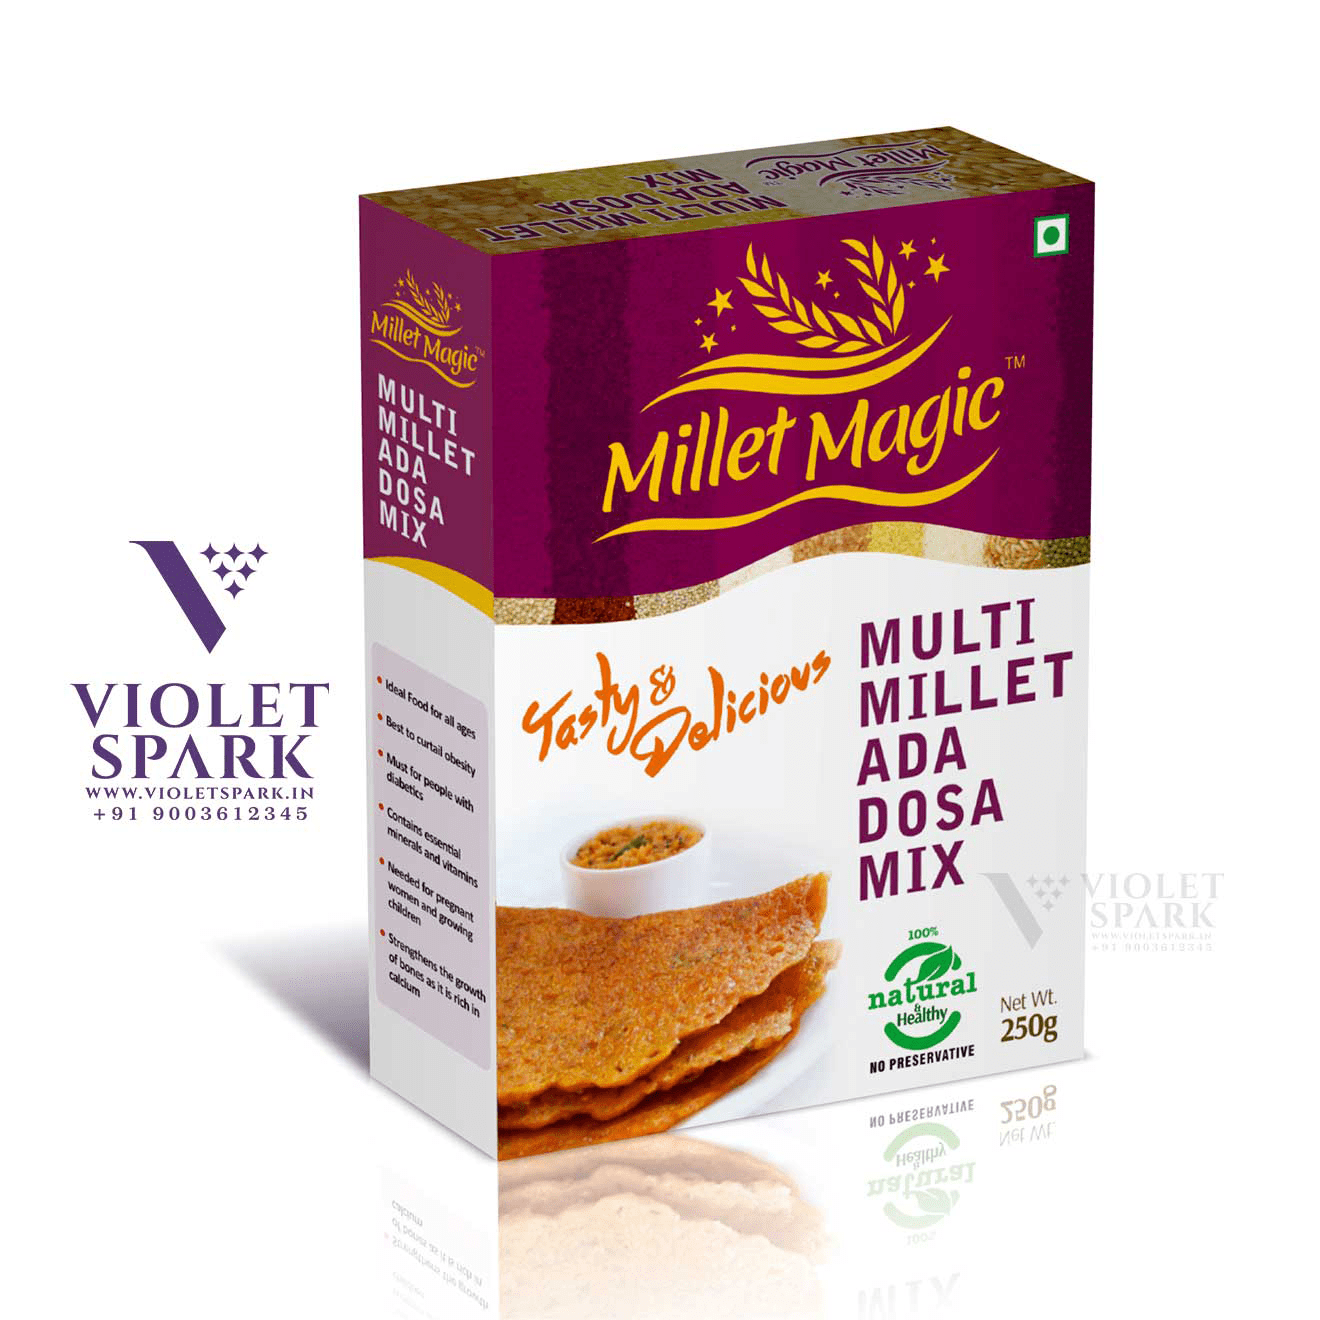 Millet Magic Ada Dosa Mix Branding Packaging Design Digital Marketing in Bangalore by Violet Spark